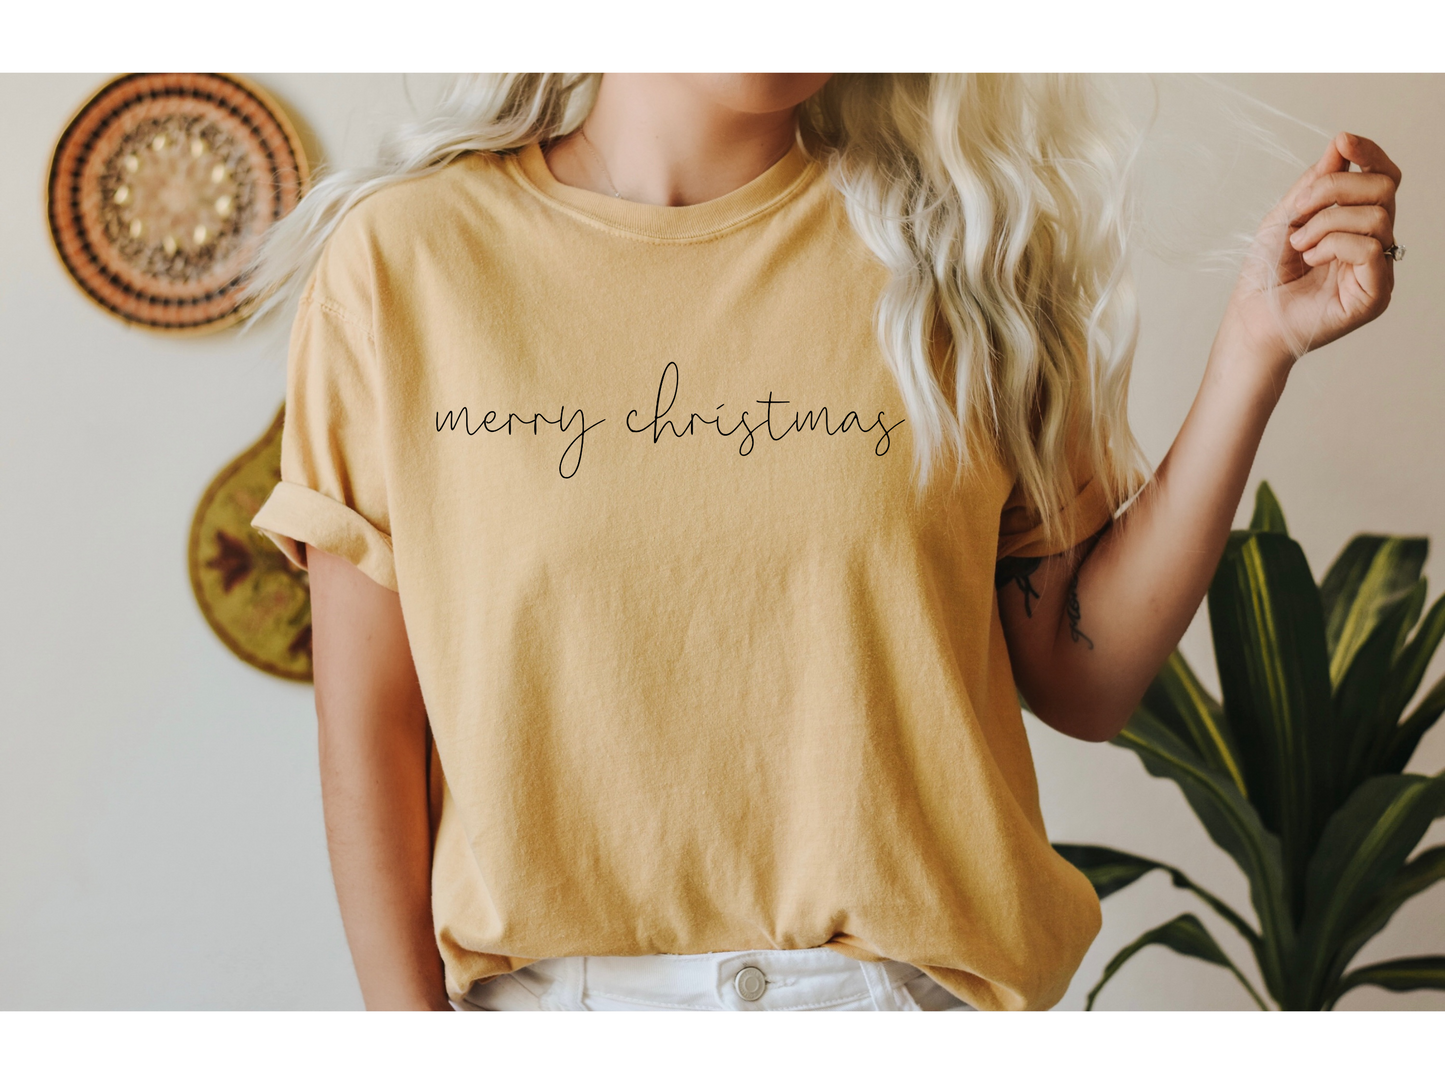 Comfort Colors Shirt, Merry Christmas Shirt, Holiday Tee, Fun Holiday Tee Shirt, Merry Shirt, Christmas Comfort Colors Shirt